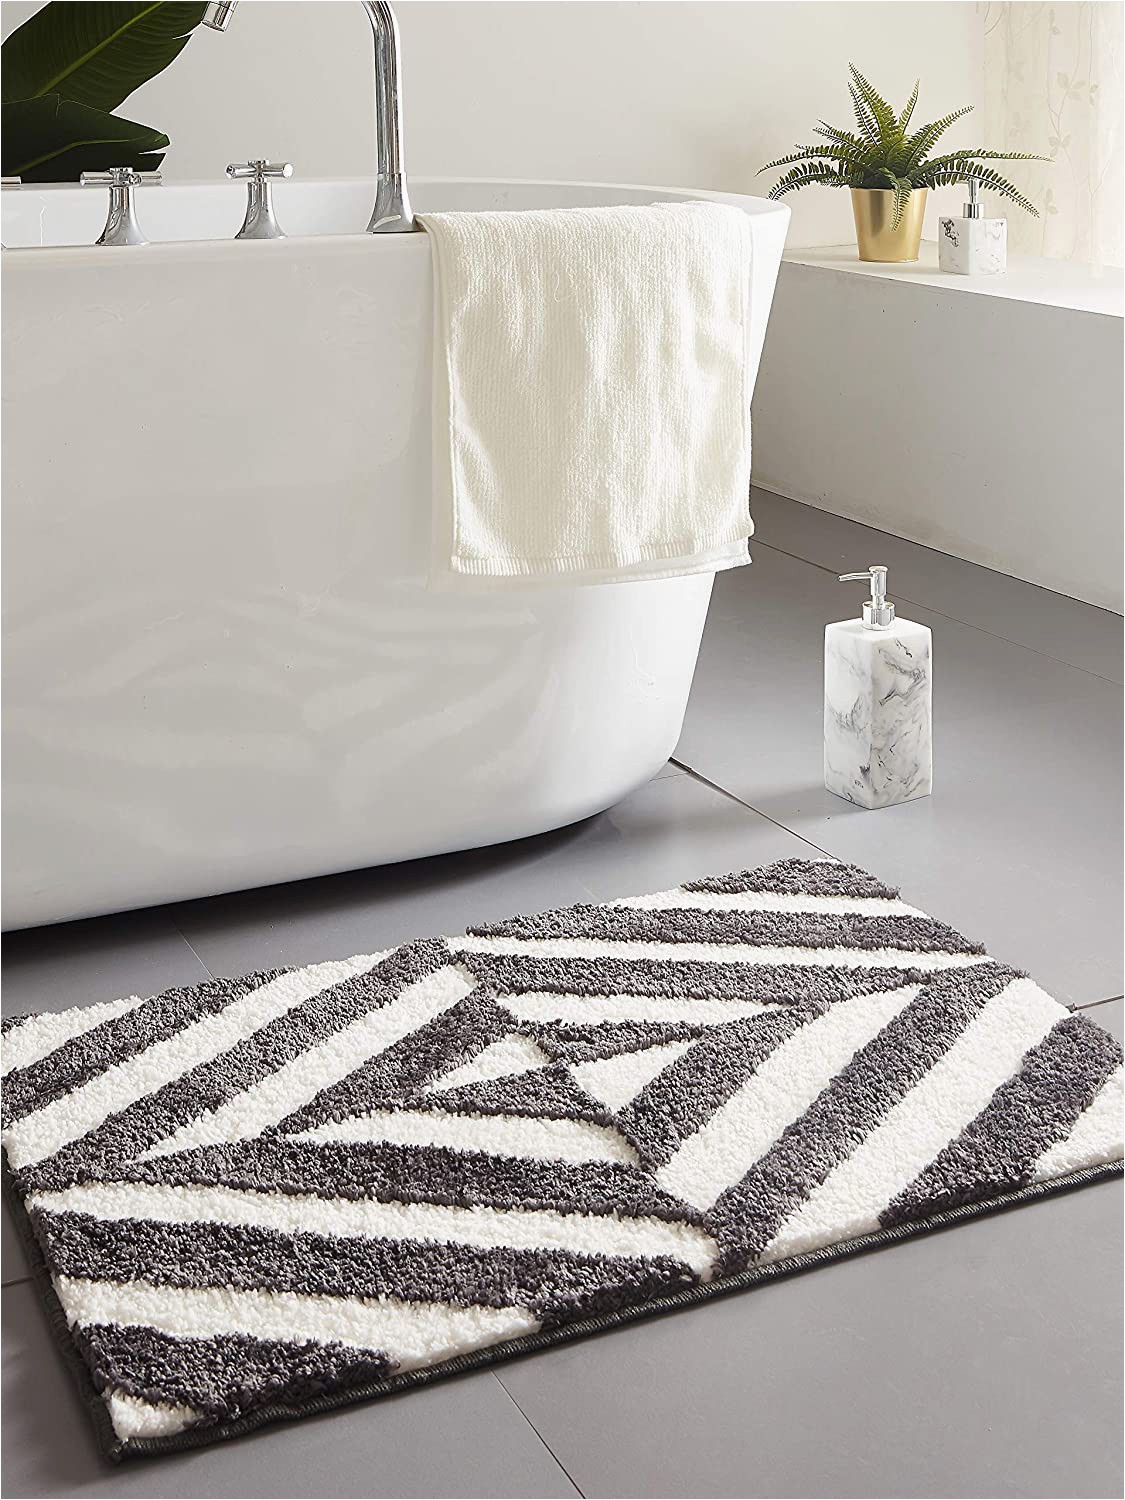 Black and Gray Bath Rugs Amazon Desiderare Thick Fluffy Dark Grey Bath Mat 31